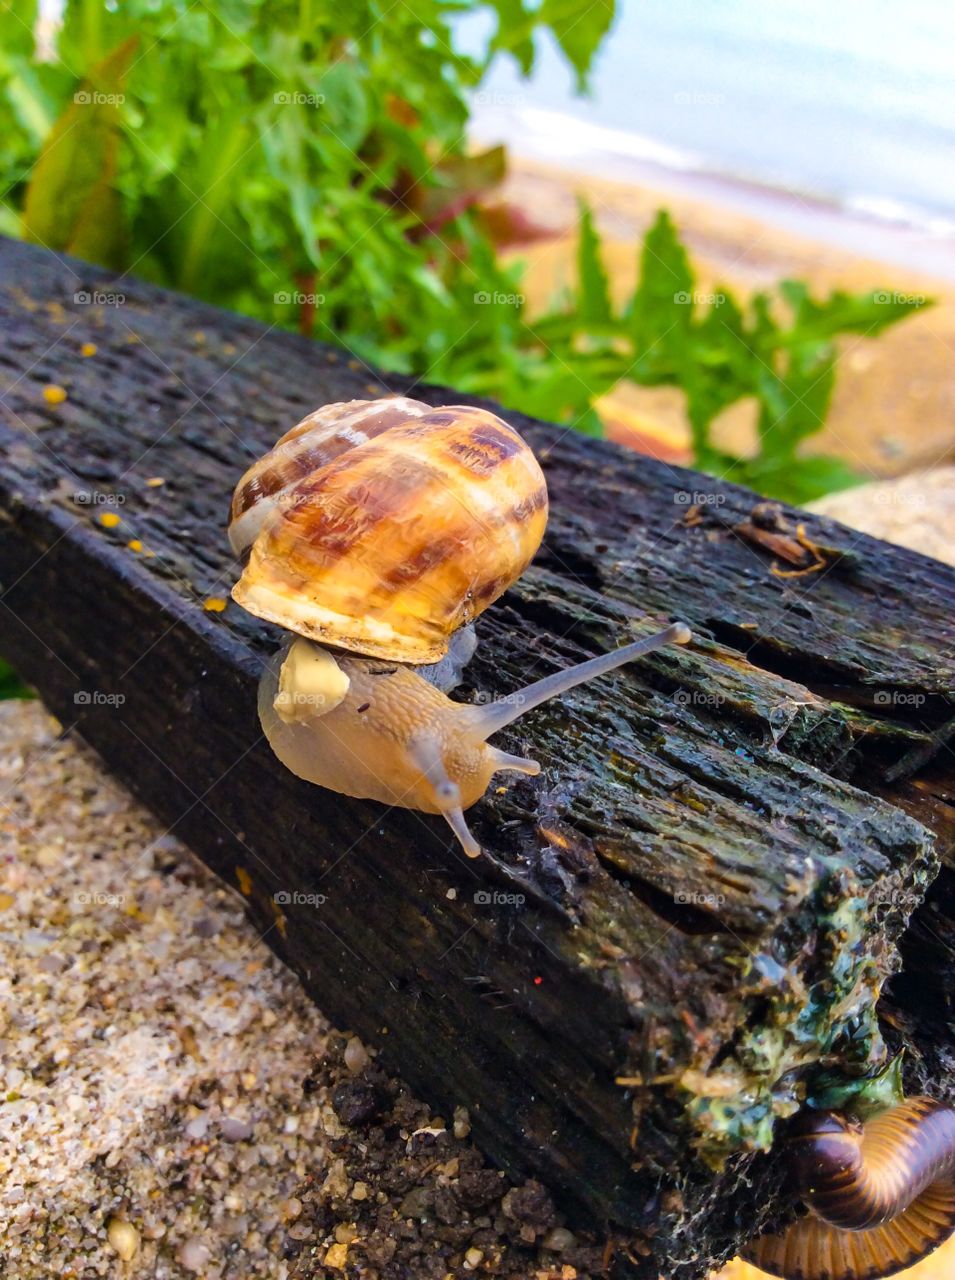 Close-up of a snail